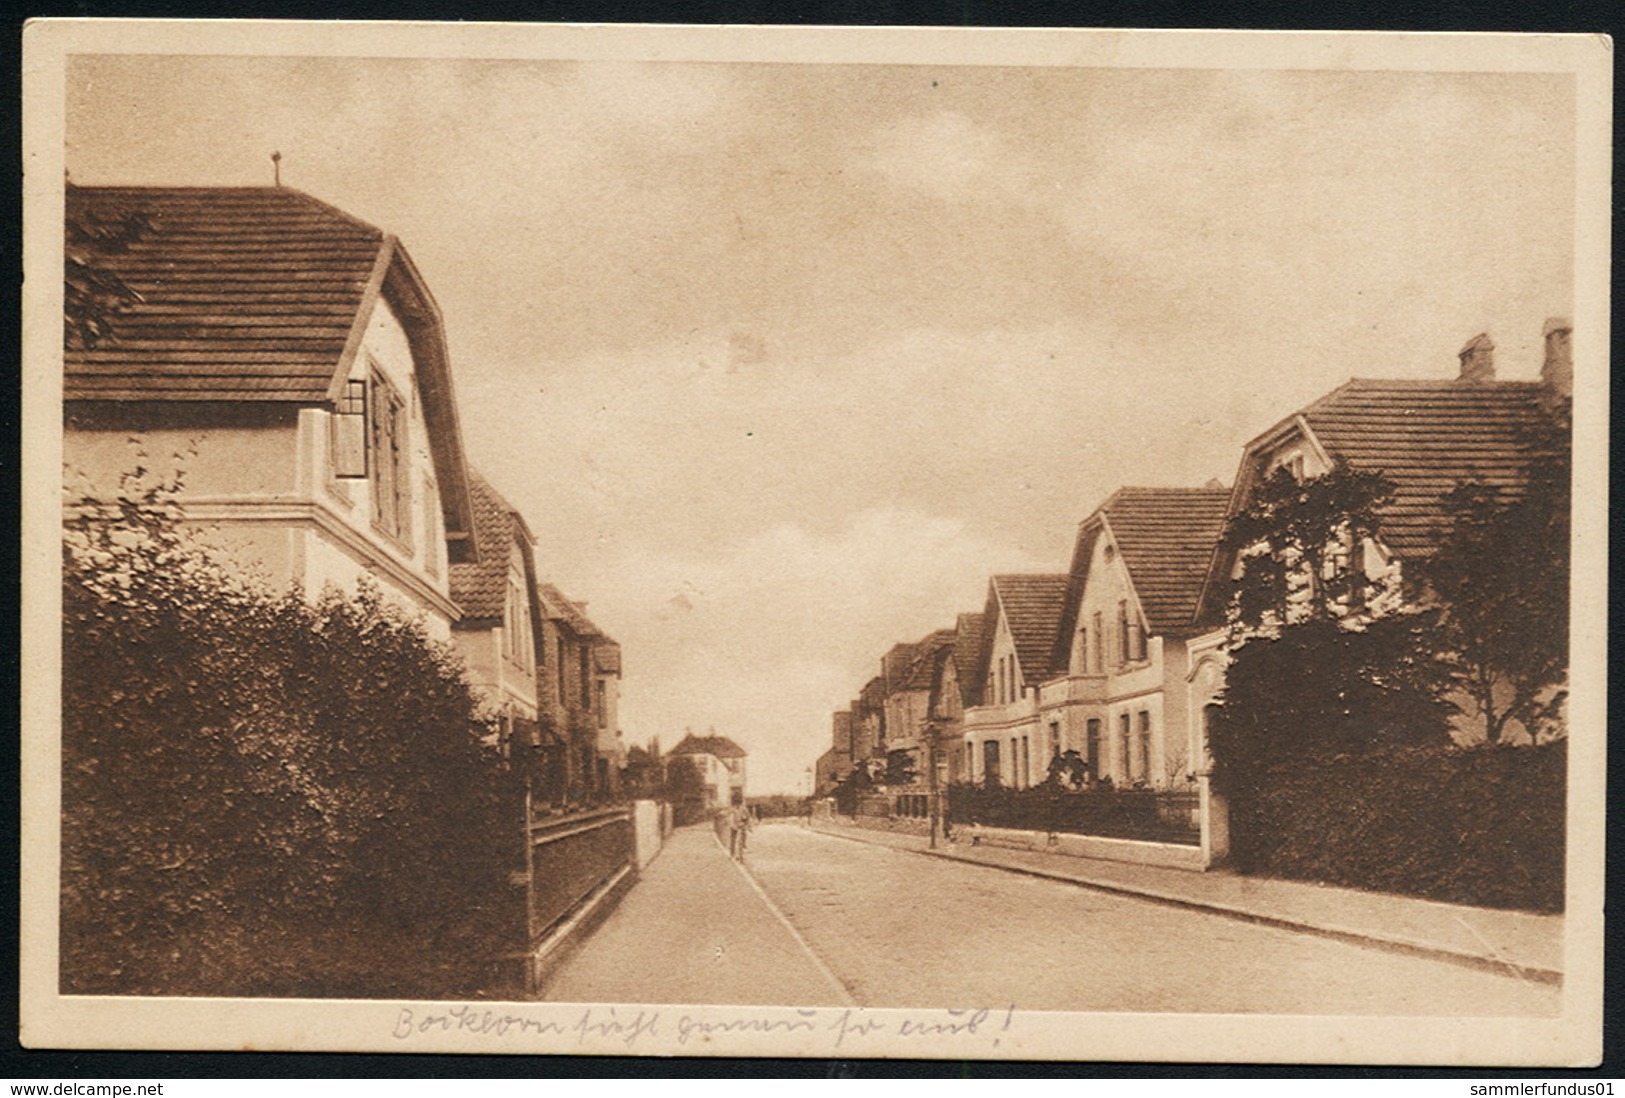 AK/CP Varel  Bismarckstrasse   Gel./circ. 1918   Erhaltung/Cond. 2  Nr. 00998 - Varel